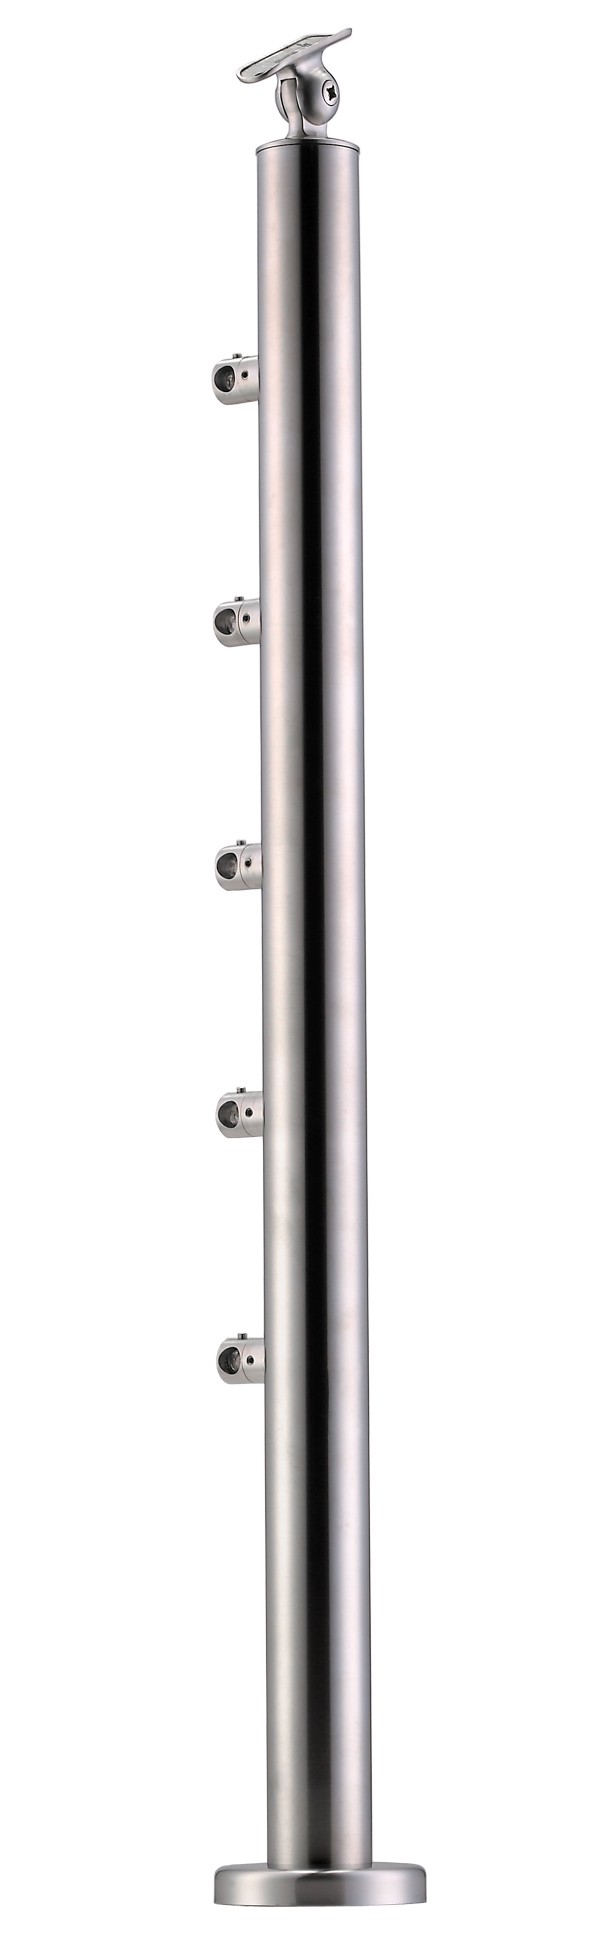 Poteaux de balustrade en acier inoxydable - tubulaires - SS:2020557A